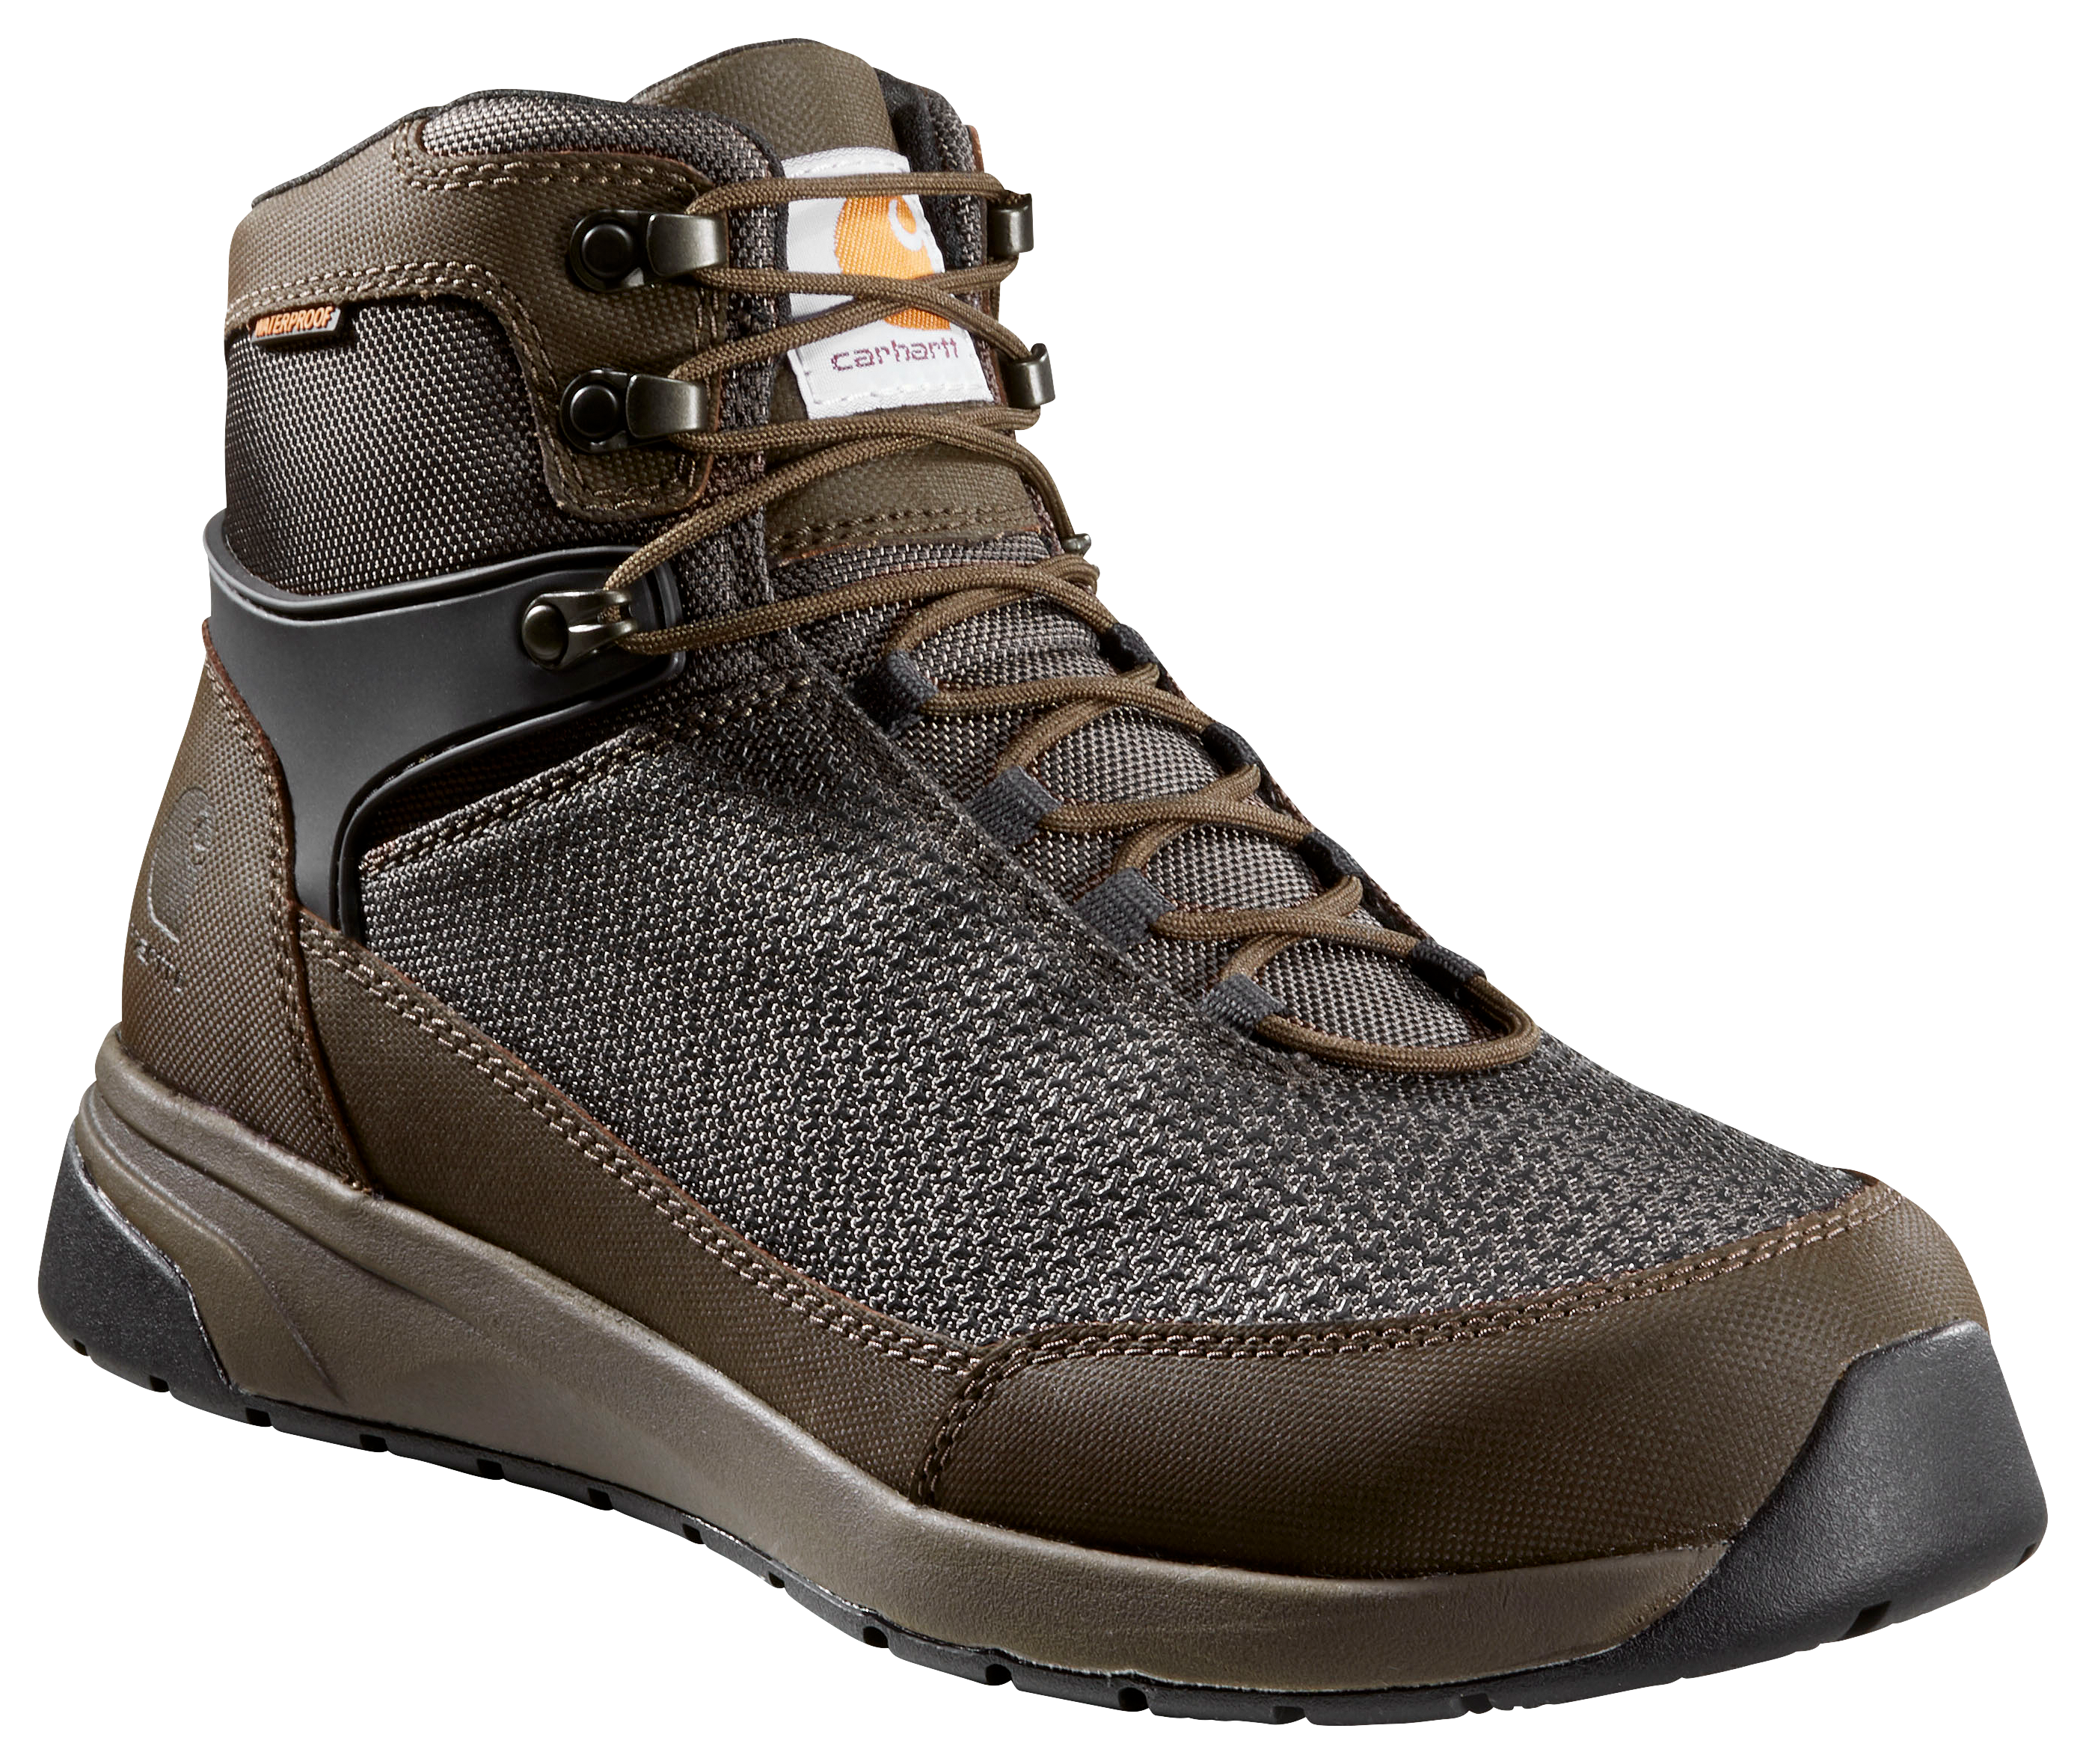 Carhartt Force 6"" Nano Composite-Toe Work Boots for Men - Espresso - 10M